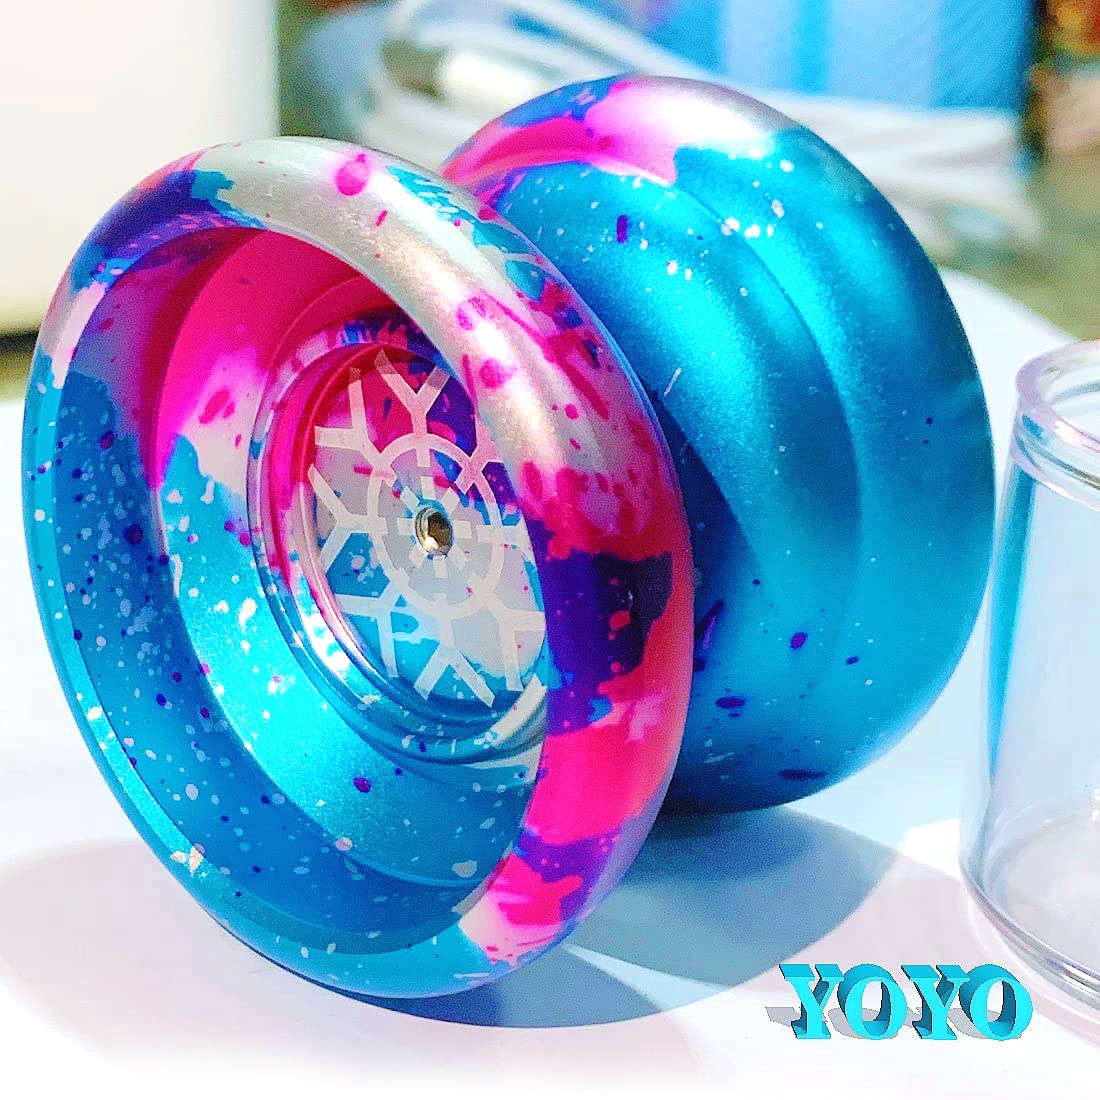 Unresponsive Yoyo,Professional Yoyo ,Aluminum Beginner Yo-Yos Ball for Yoyos Players with 10 Yo Yo Strings - image 3 of 6